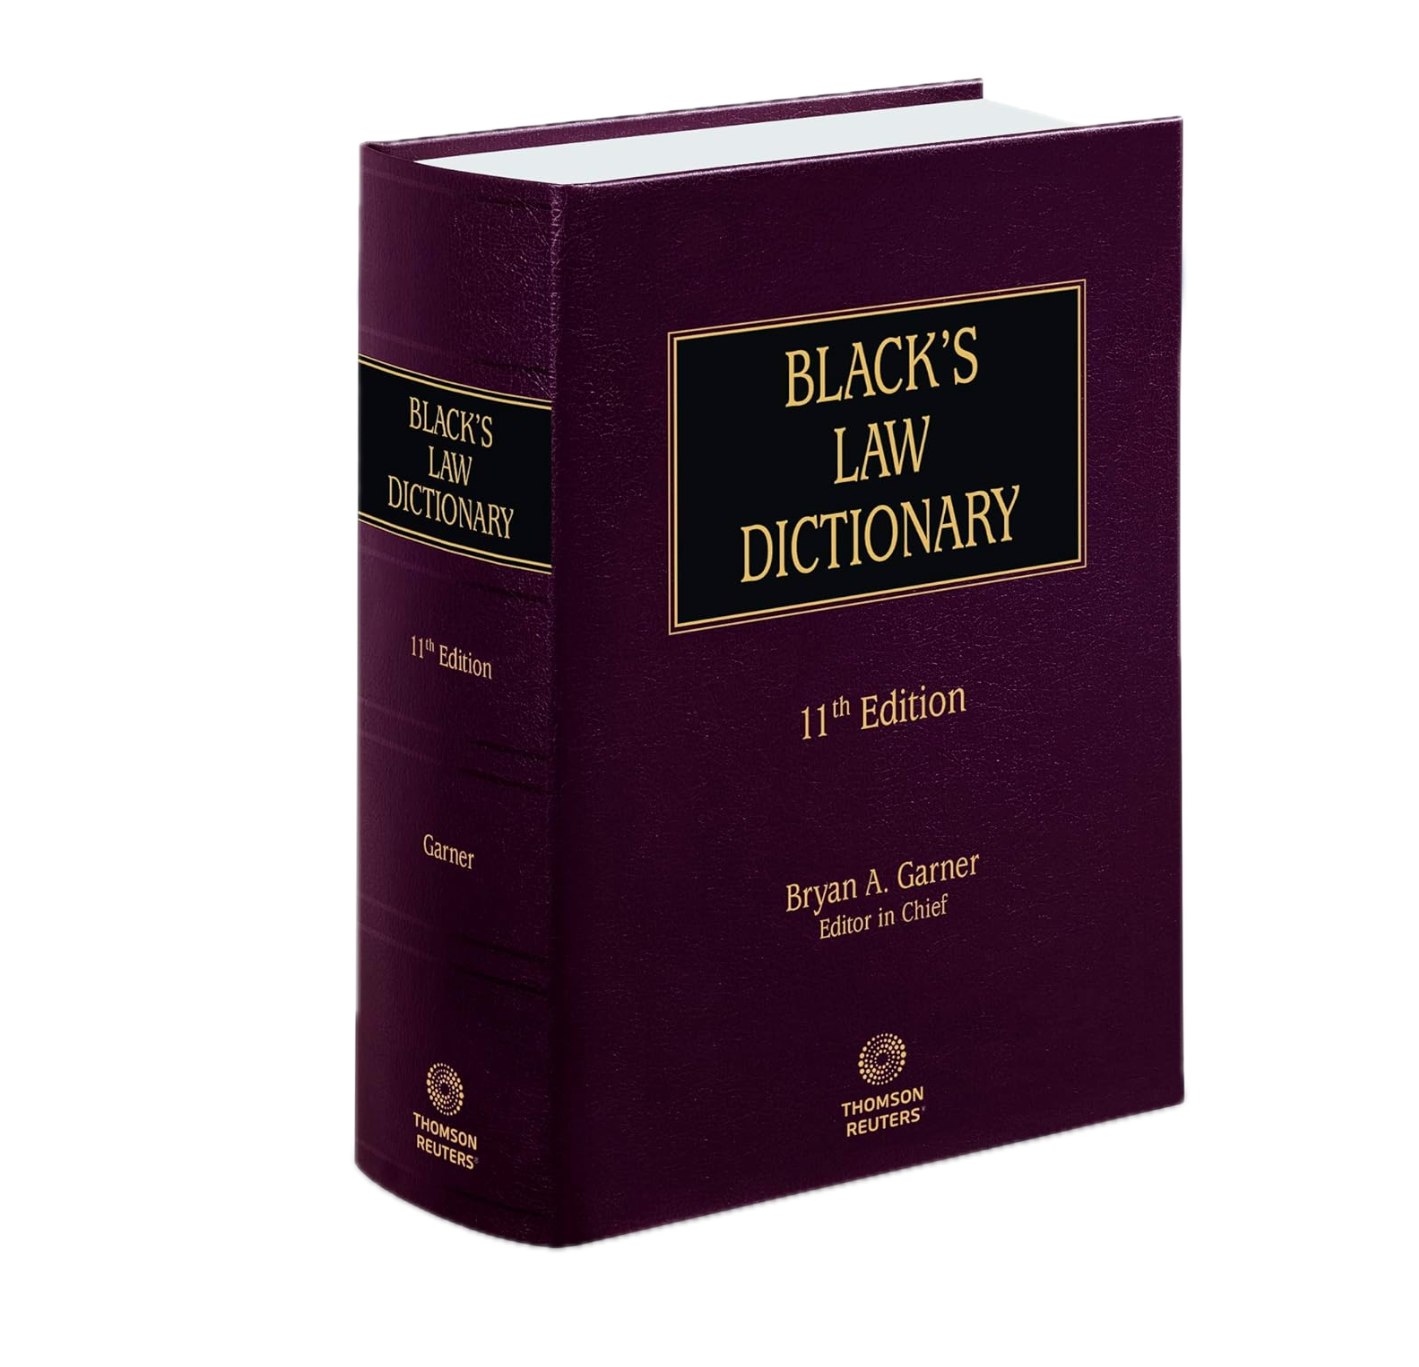 Blacks law dictionary.